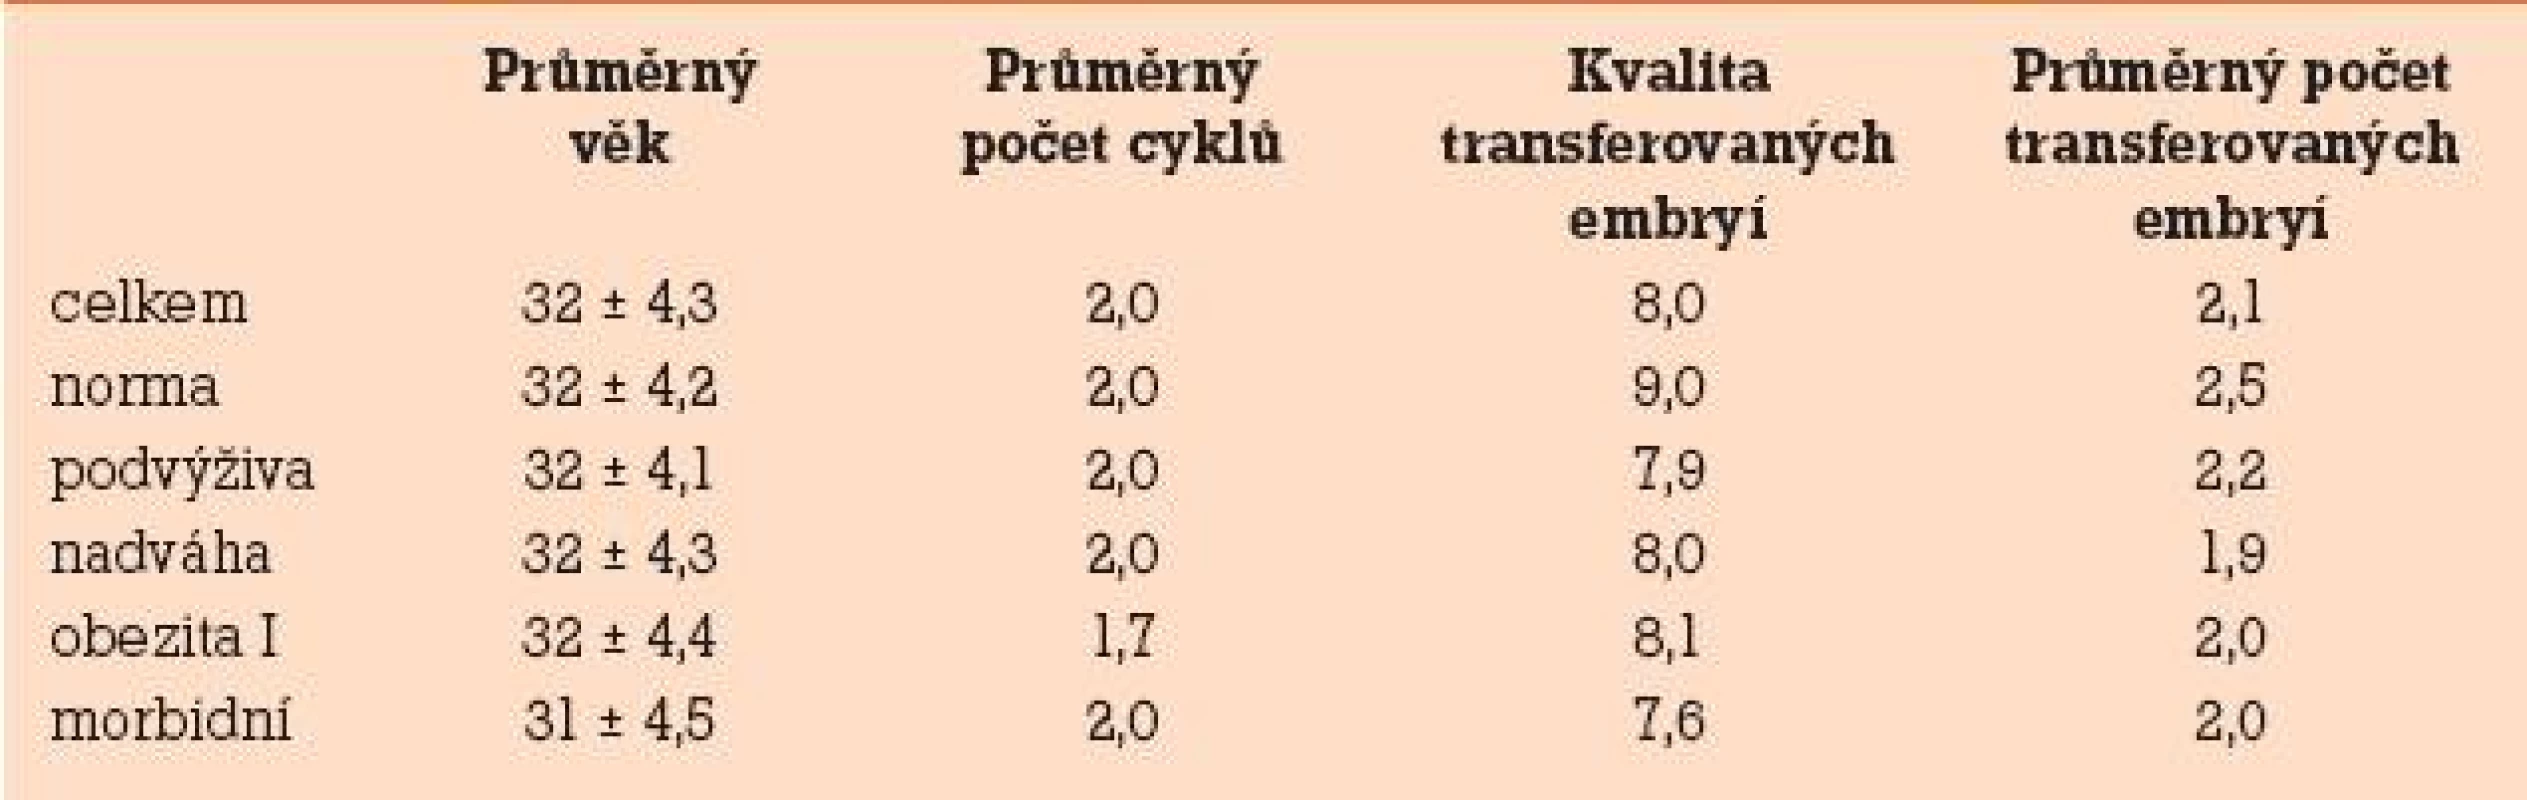 Výsledky sledovaných faktorů (věk, počet IVF cyklů, kvalita transferovaných embryí, průměrný počet transferovaných embryí).